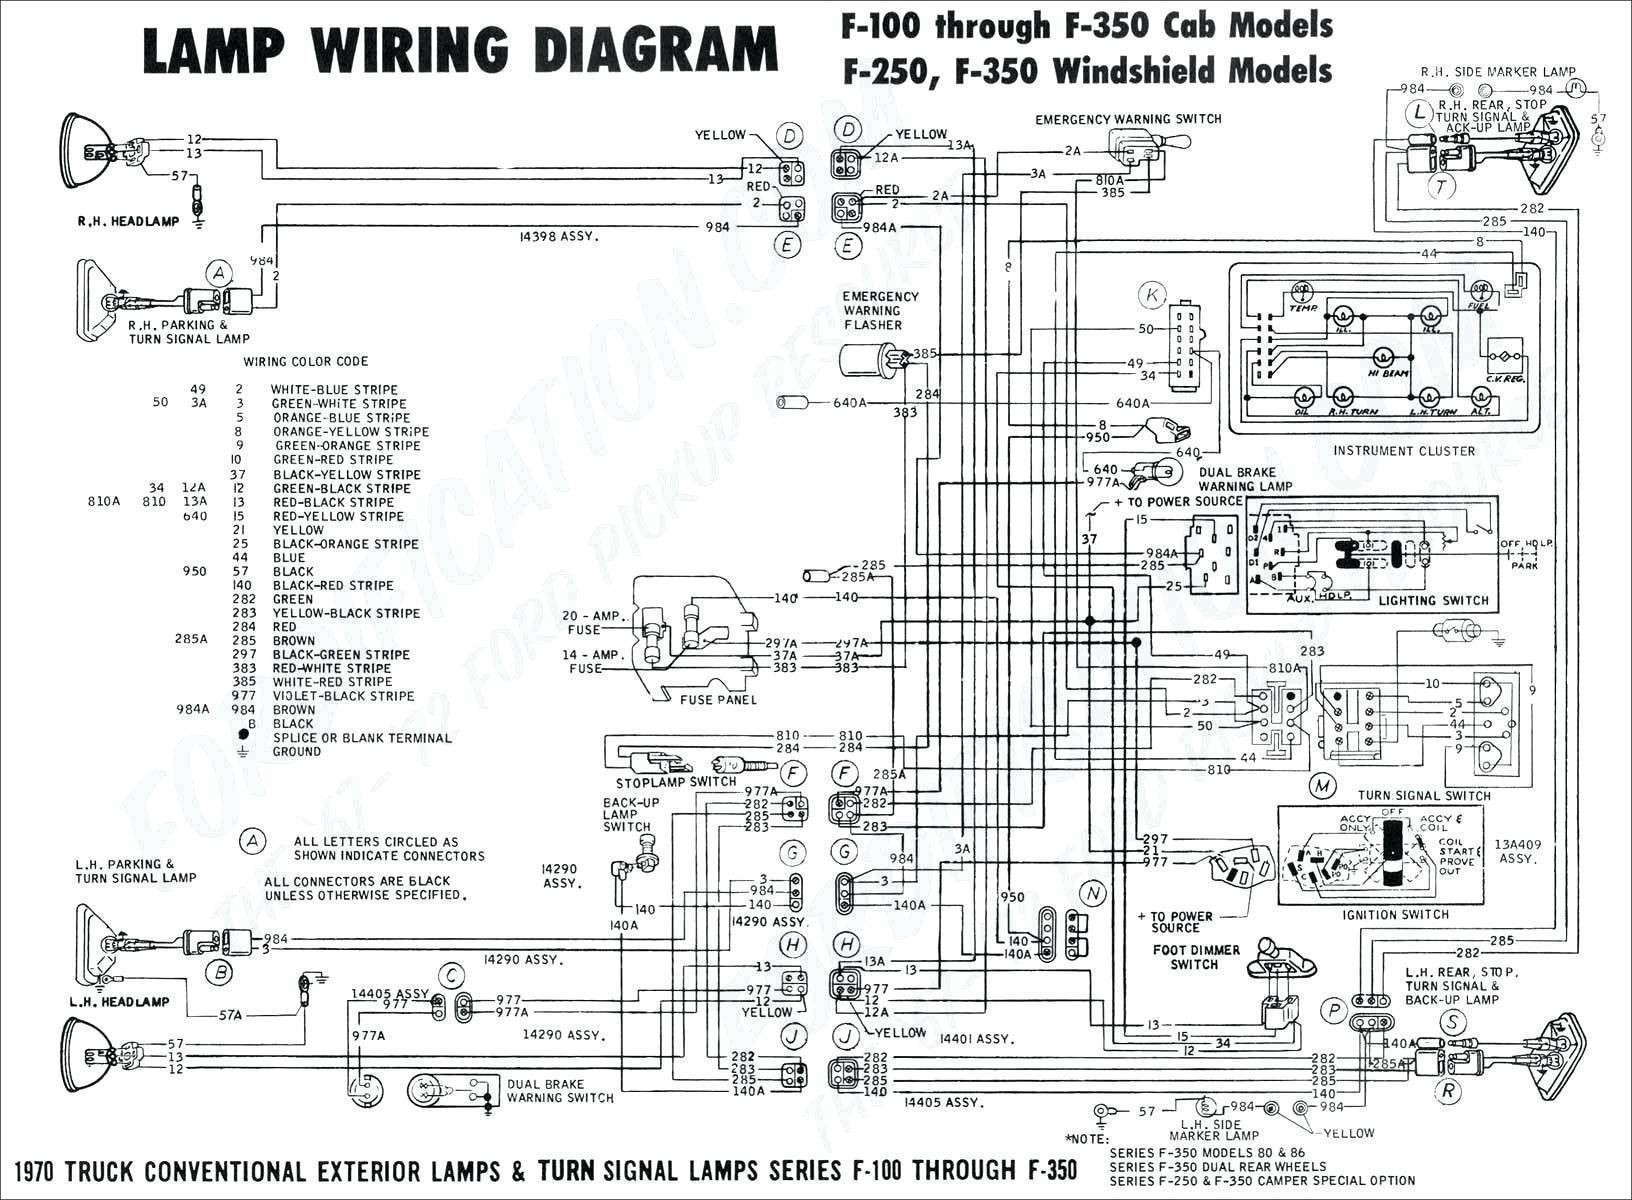 2004 Chevy Aveo Engine Diagram R32 Headlight Wiring Diagram – Data Wiring Diagram within Vw R32 Of 2004 Chevy Aveo Engine Diagram